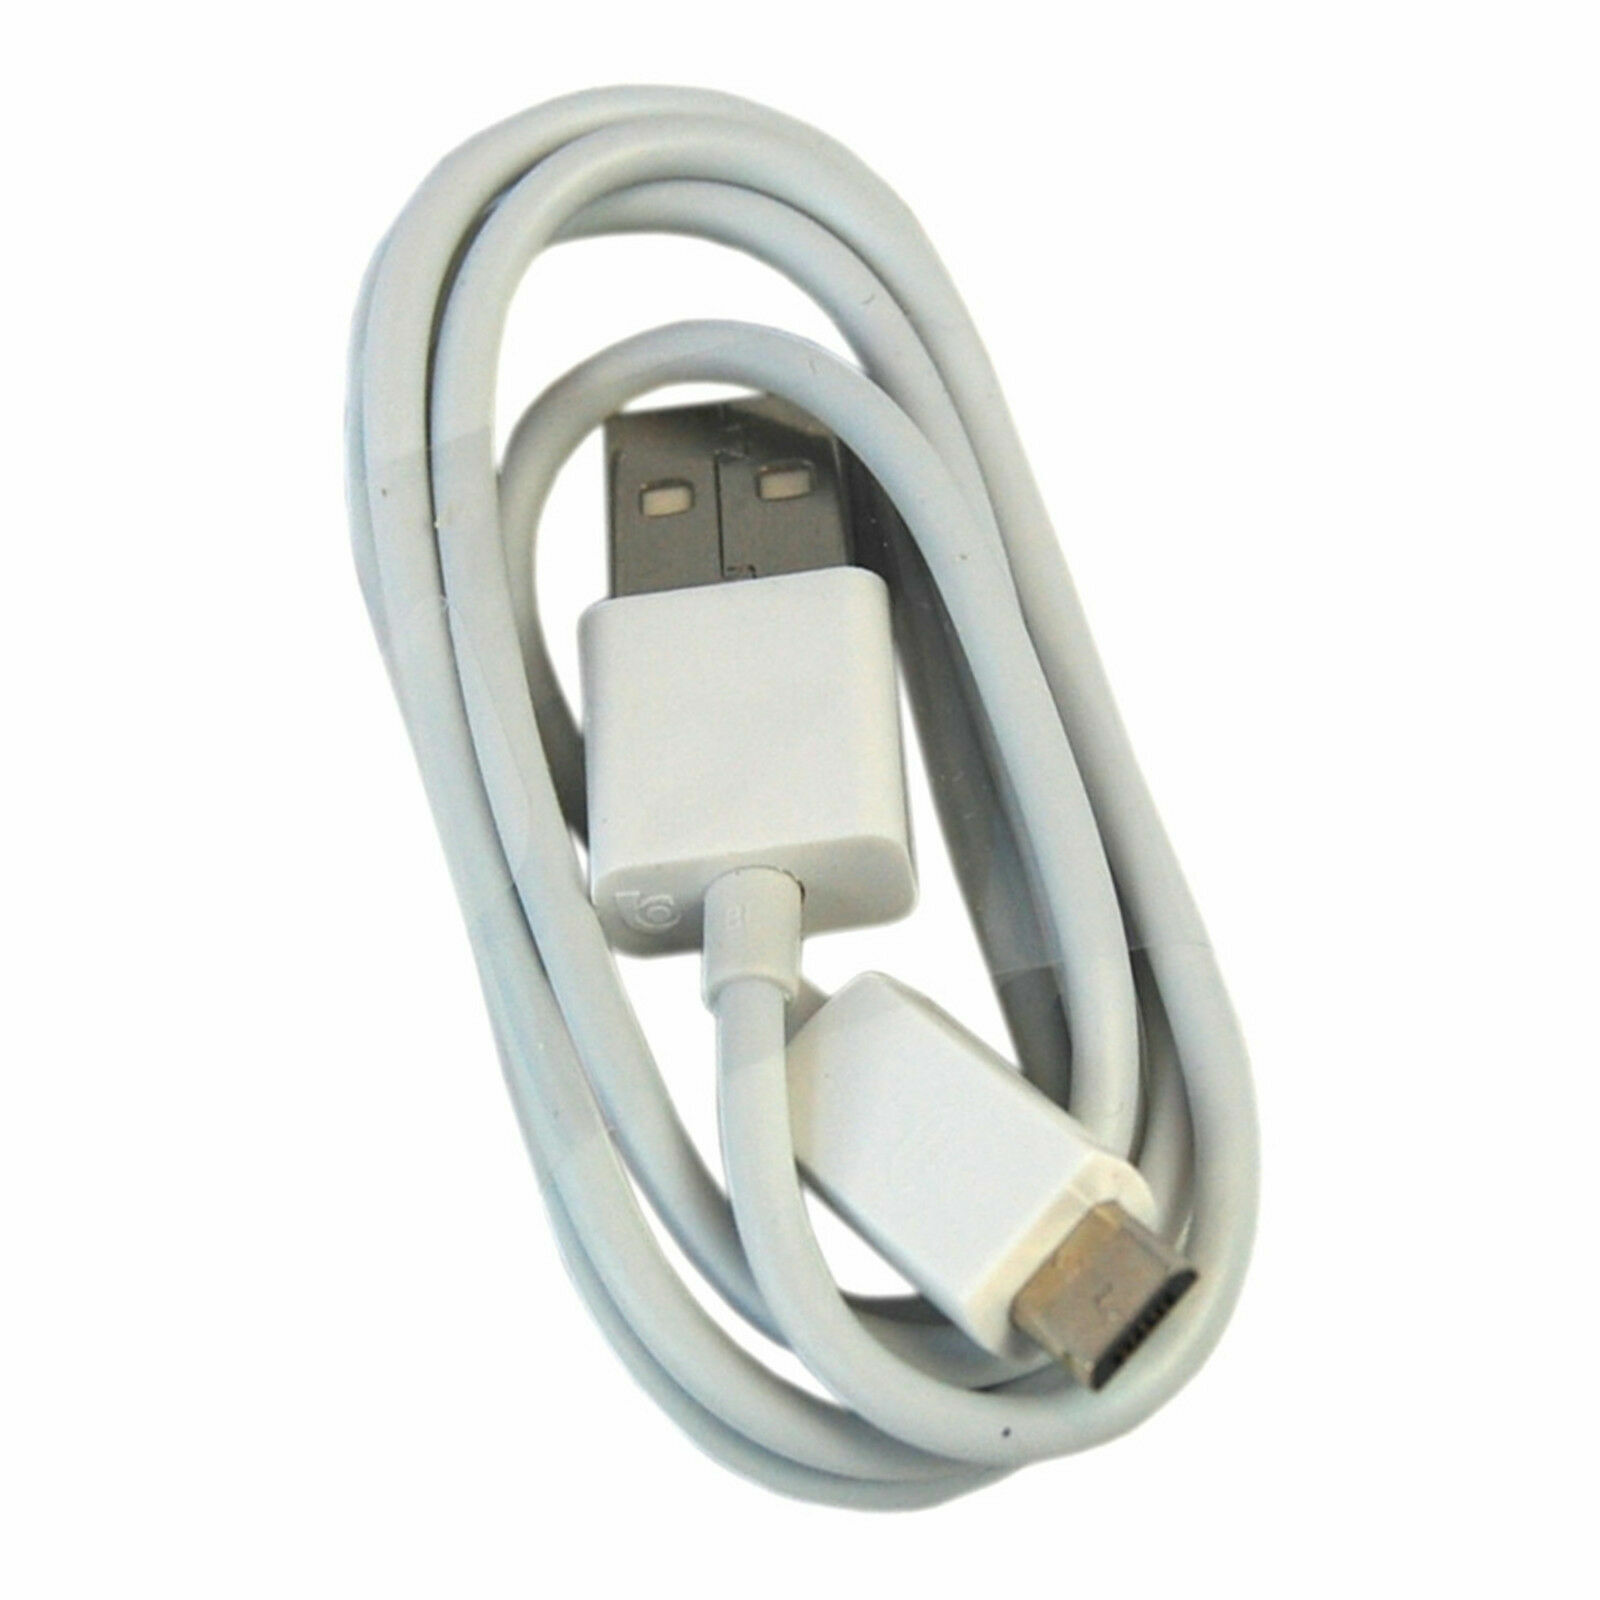 HQRP USB Charging Cable (White) for JBL Flip 4 / Charge 2+ / 3 / Clip 2 / Pulse 3 / Xtreme / GO / T450BT / E45BT / E55BT / Everest 300 / 700 / Elite 750NC - image 2 of 3